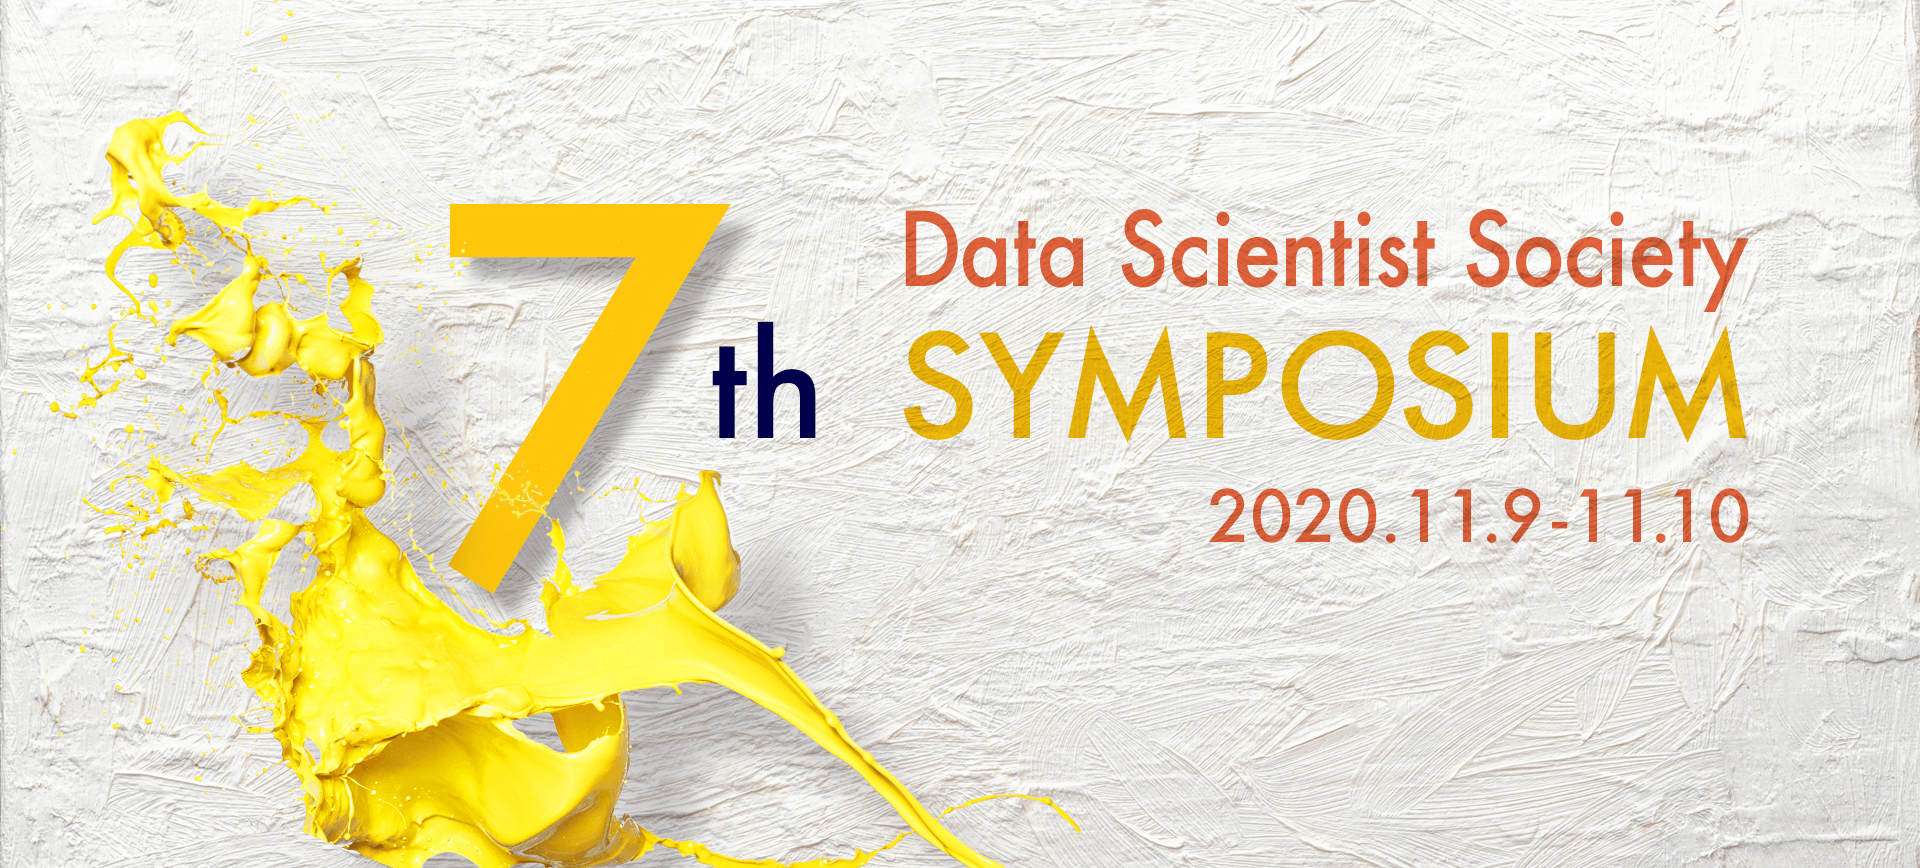 DataScientis Society SYMPOSIUM 7th 2020.11.09 - 11.10